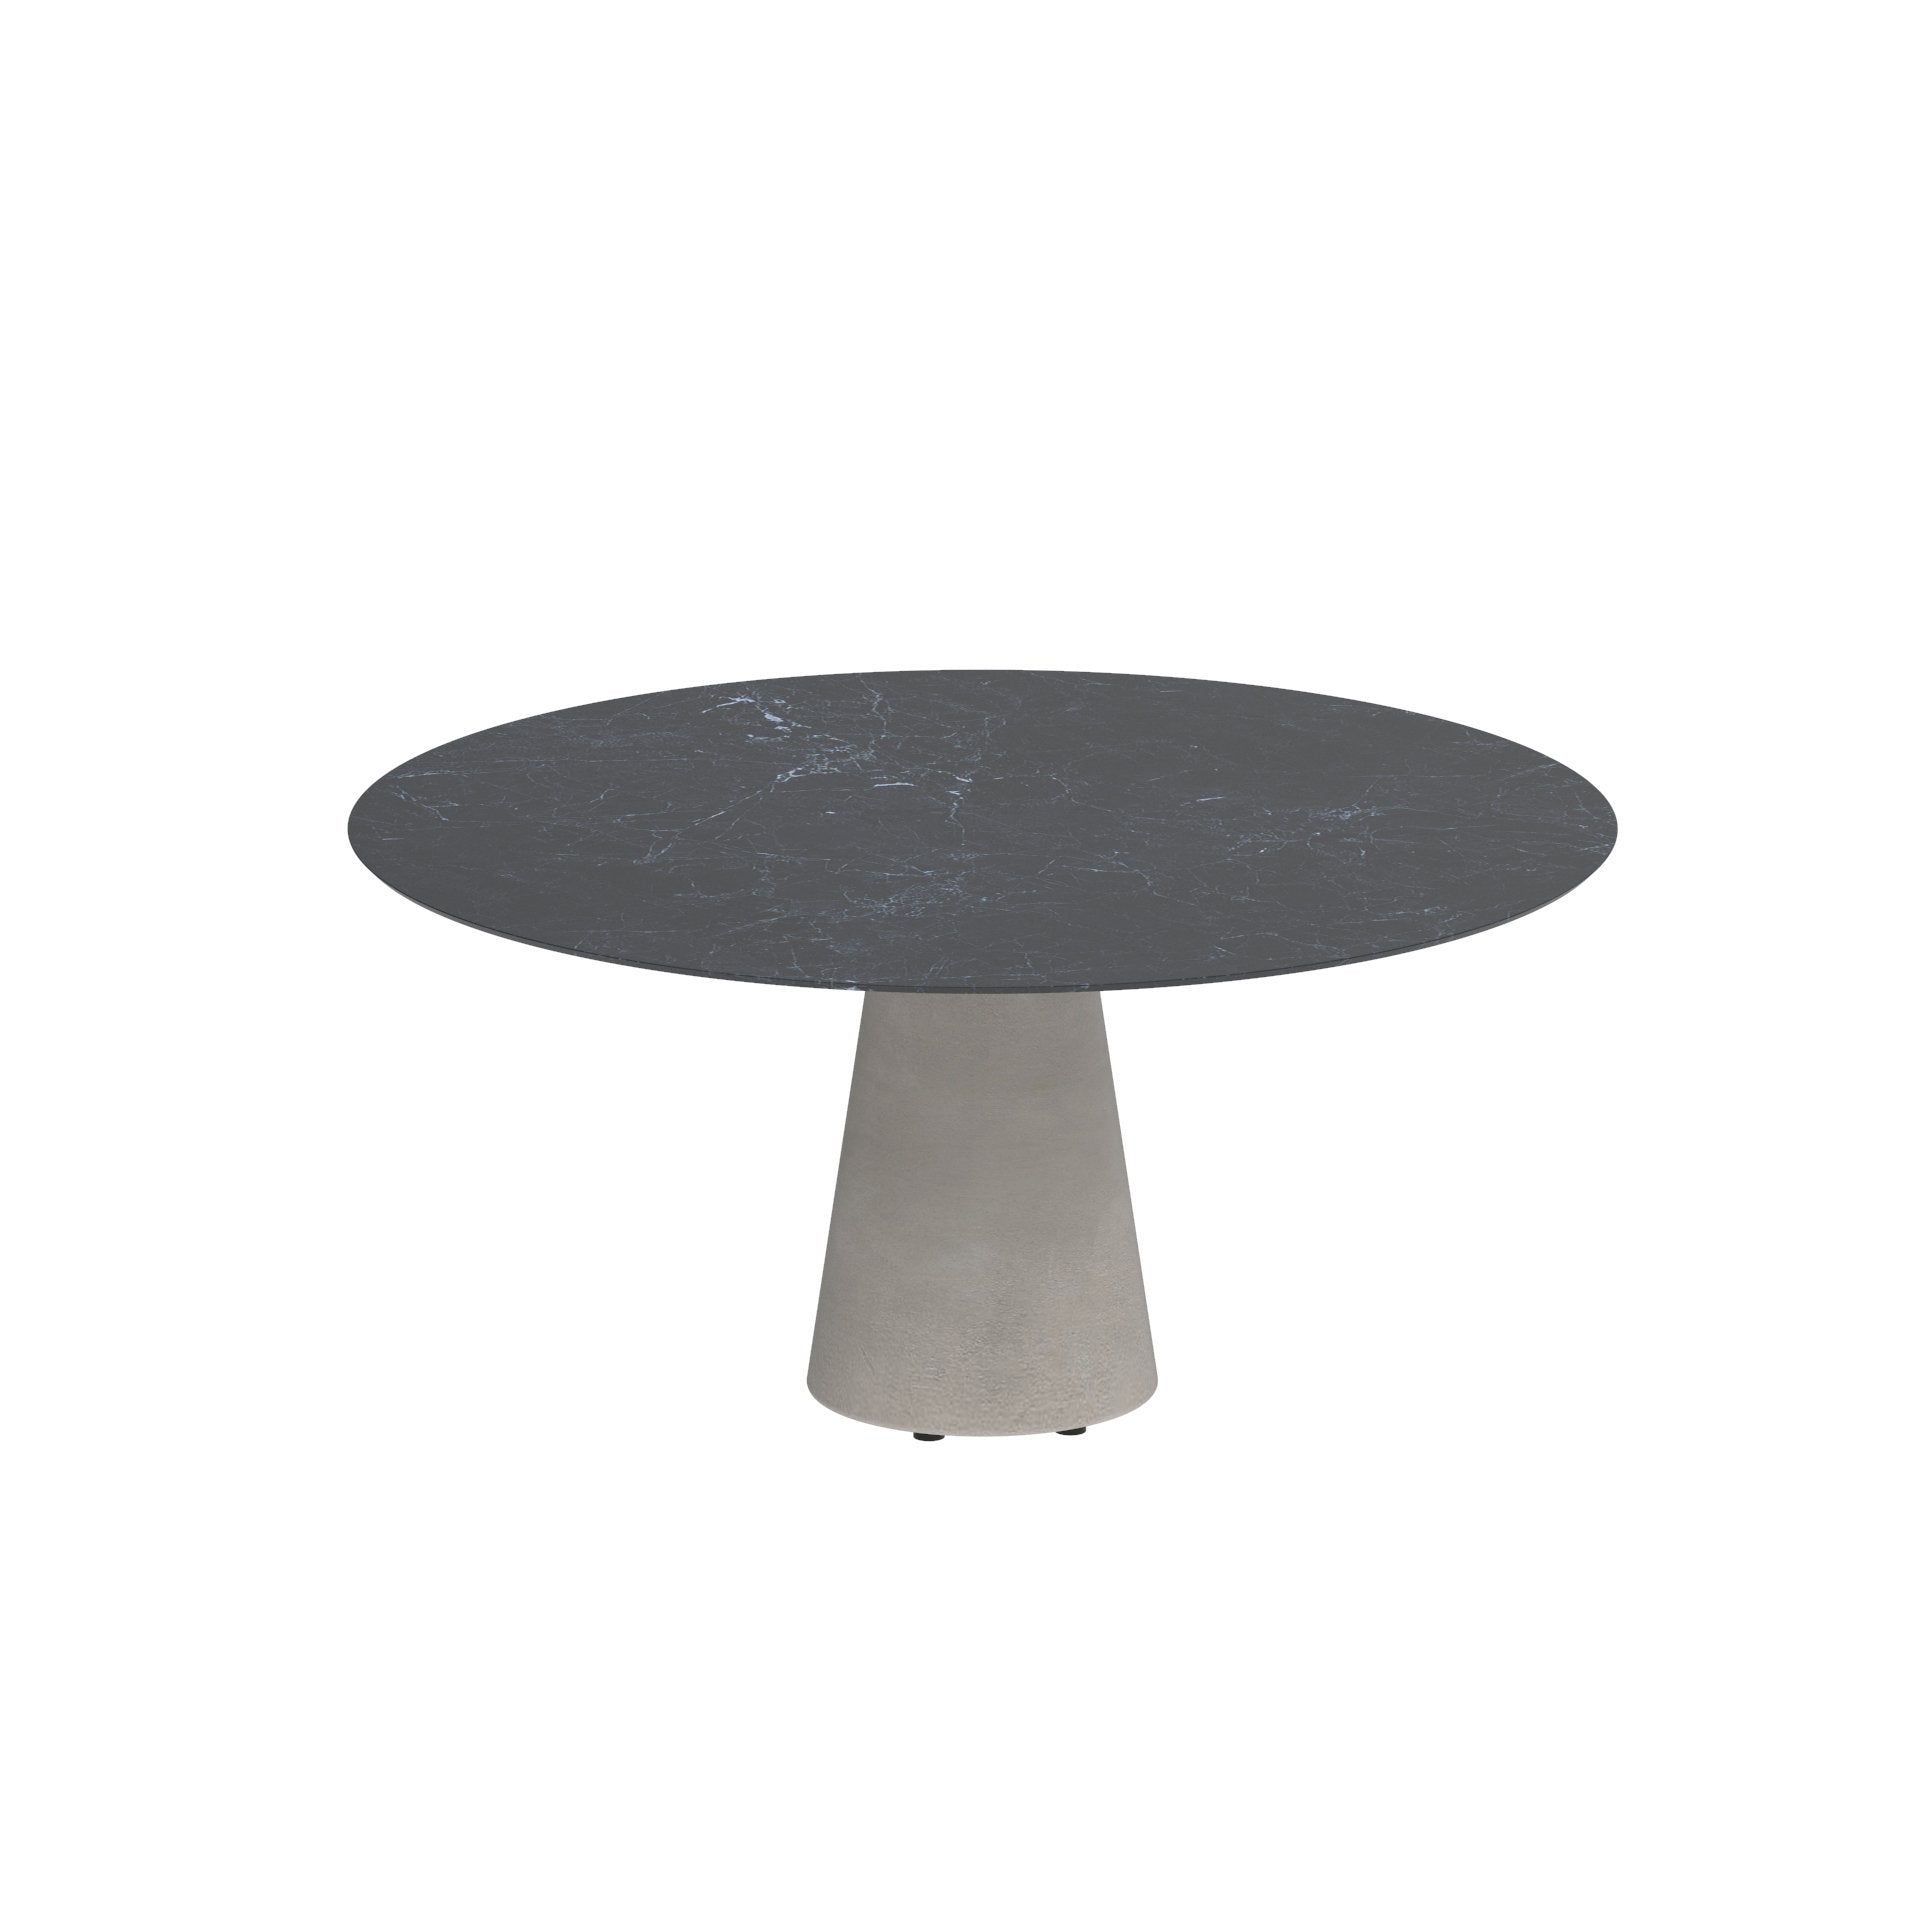 Conix 160cm Round Table